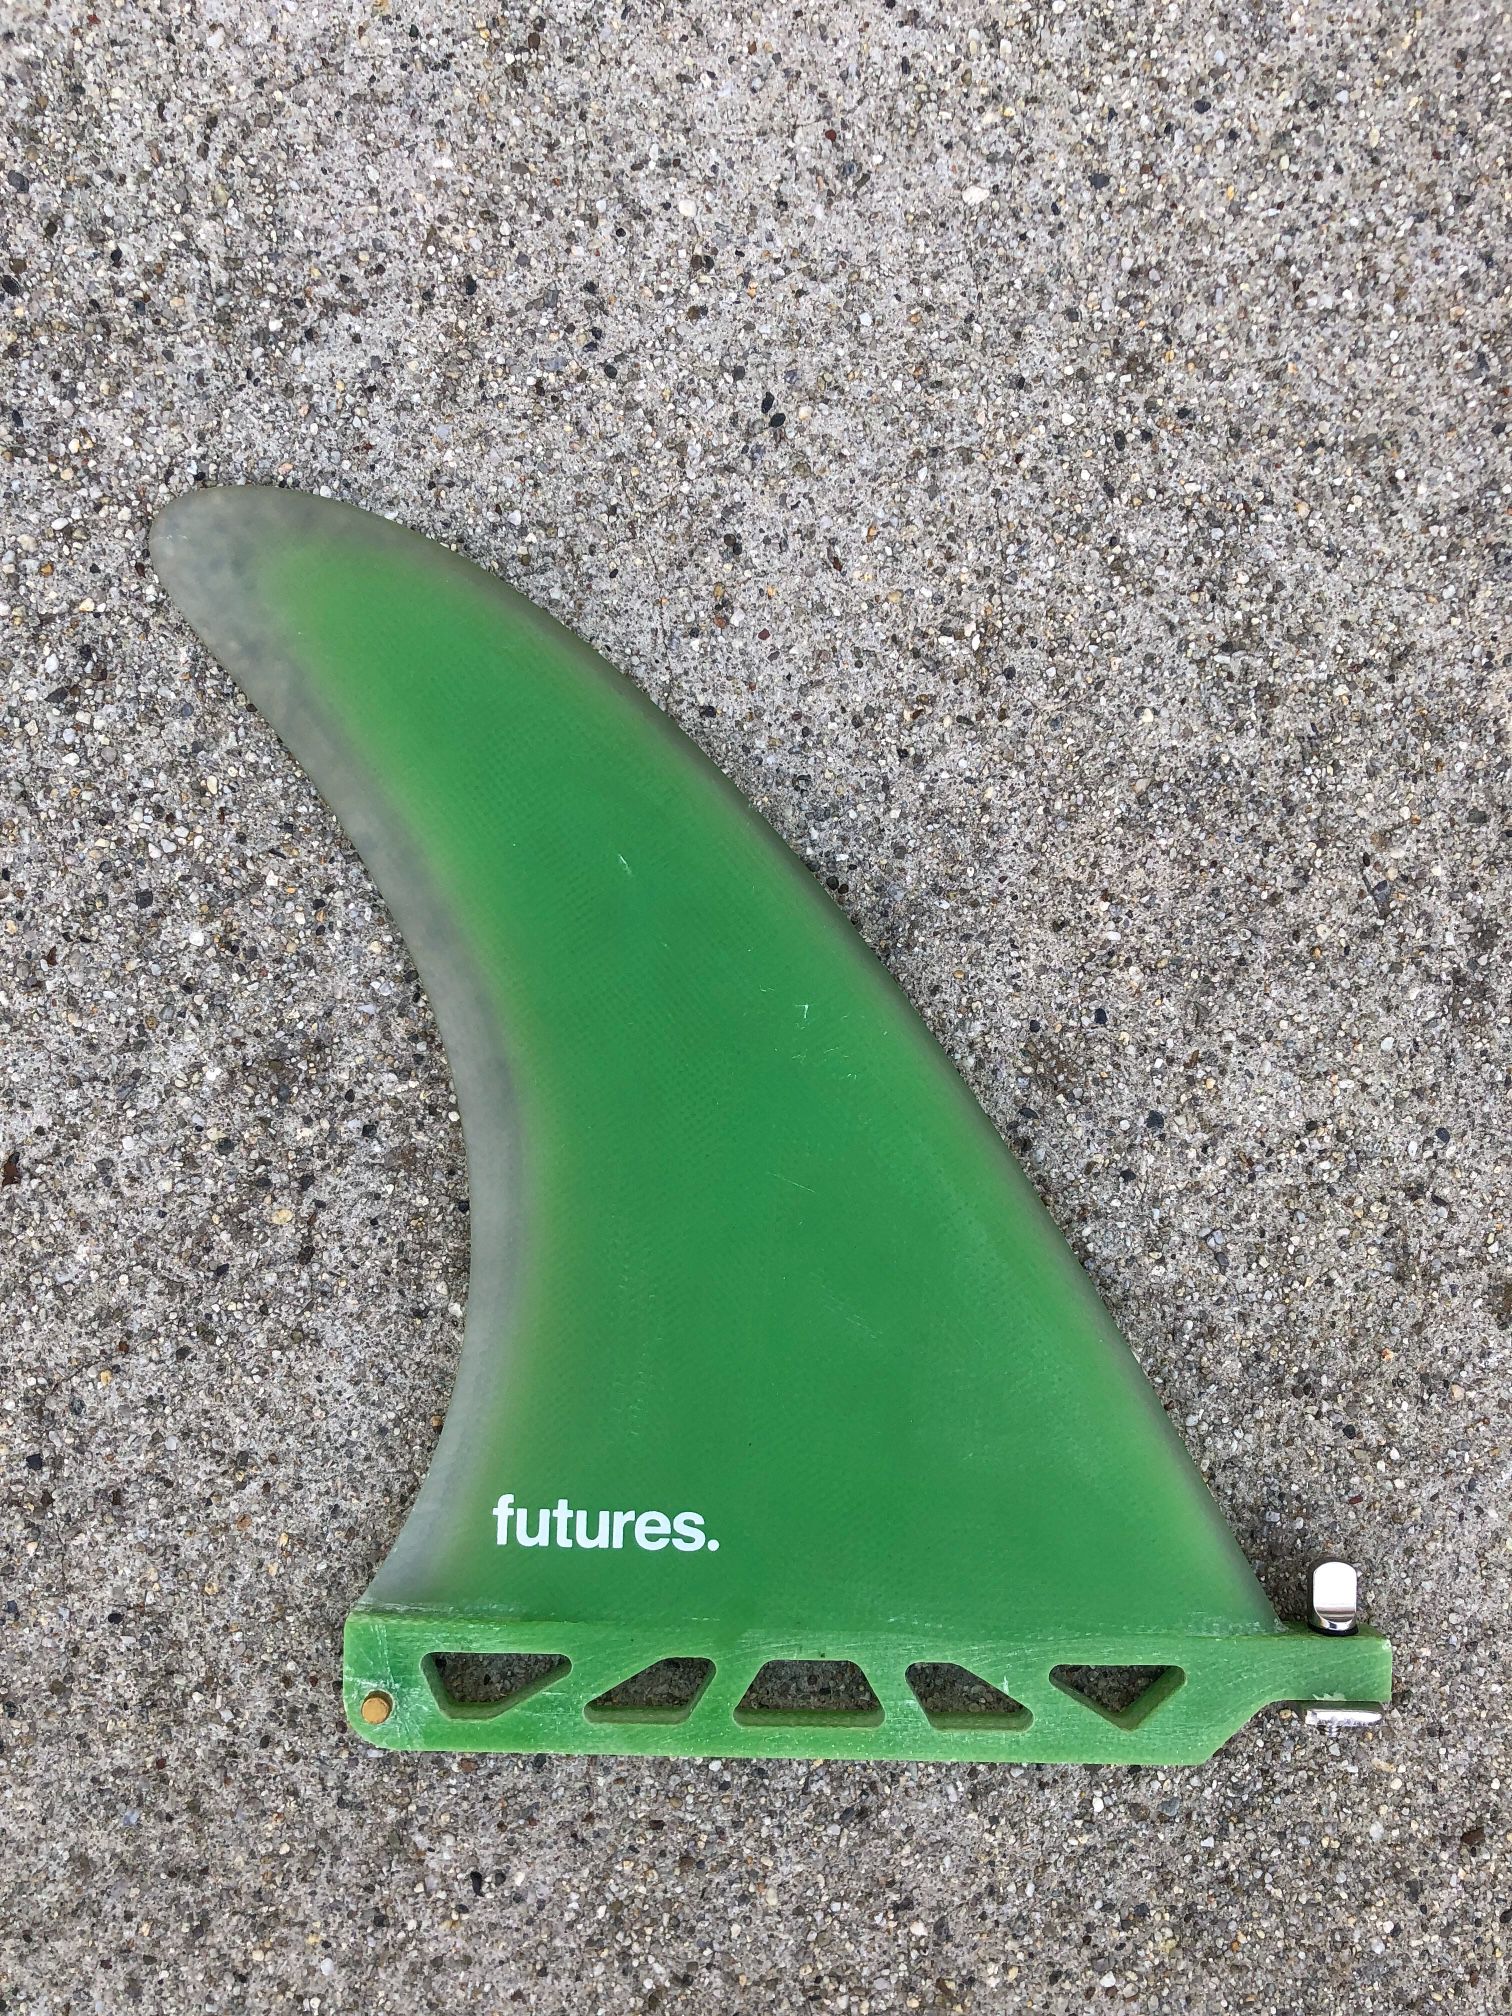 SURFBOARD FIN FOR SALE: Futures "MACHADO 7.5" Single Fin